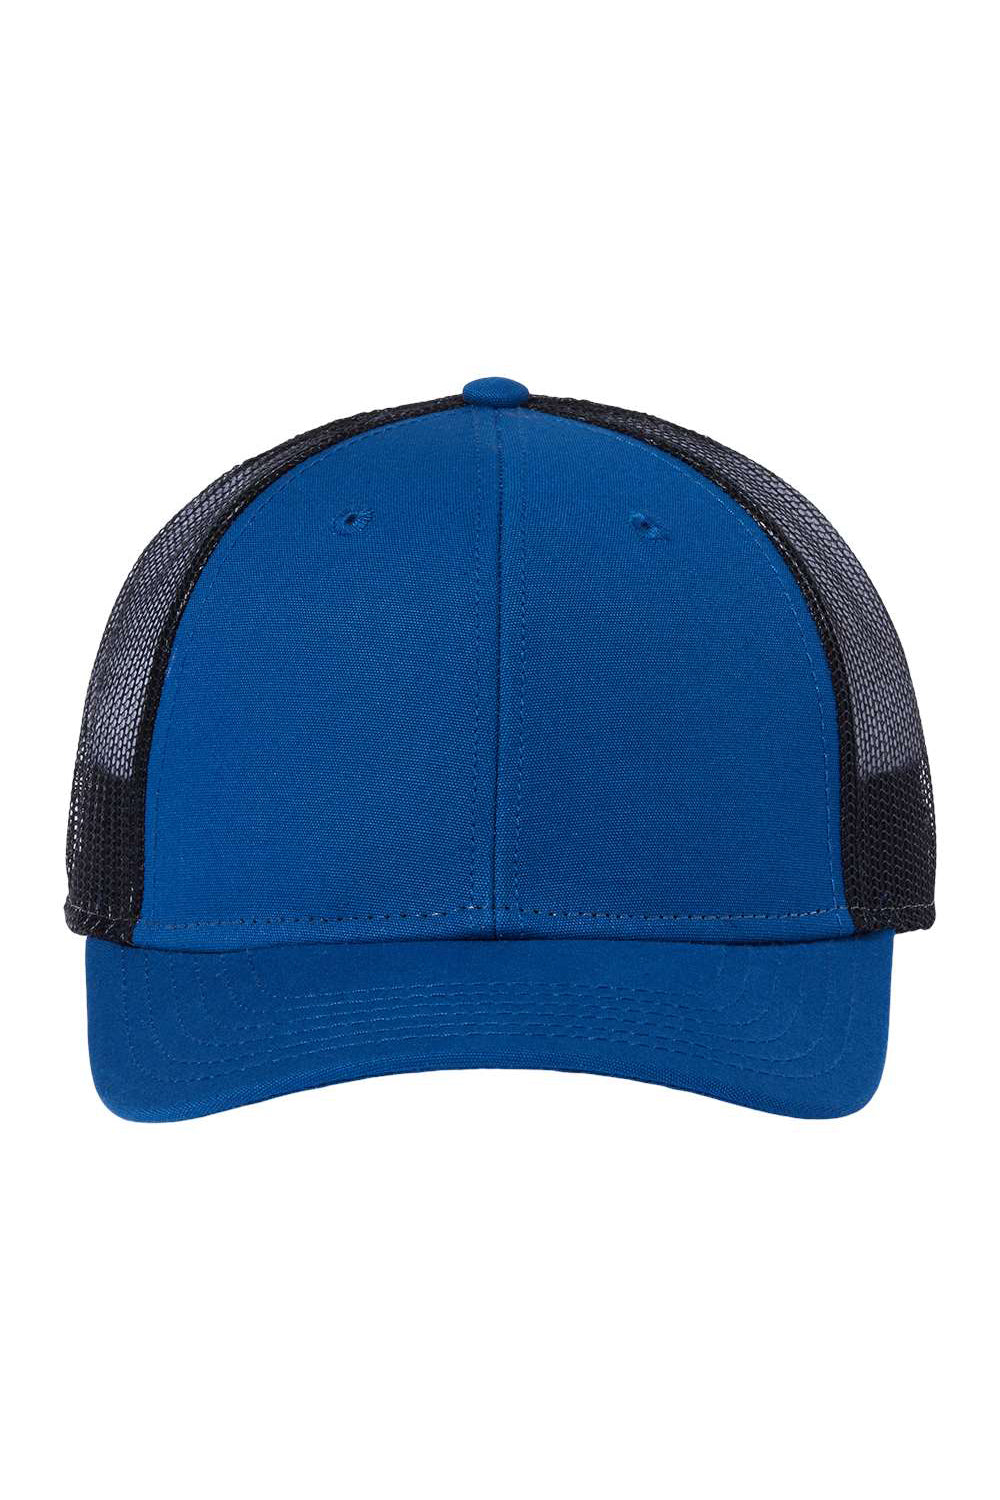 Atlantis Headwear RETH Mens Sustainable Recycled Three Snapback Trucker Hat Royal Blue/Black Flat Front